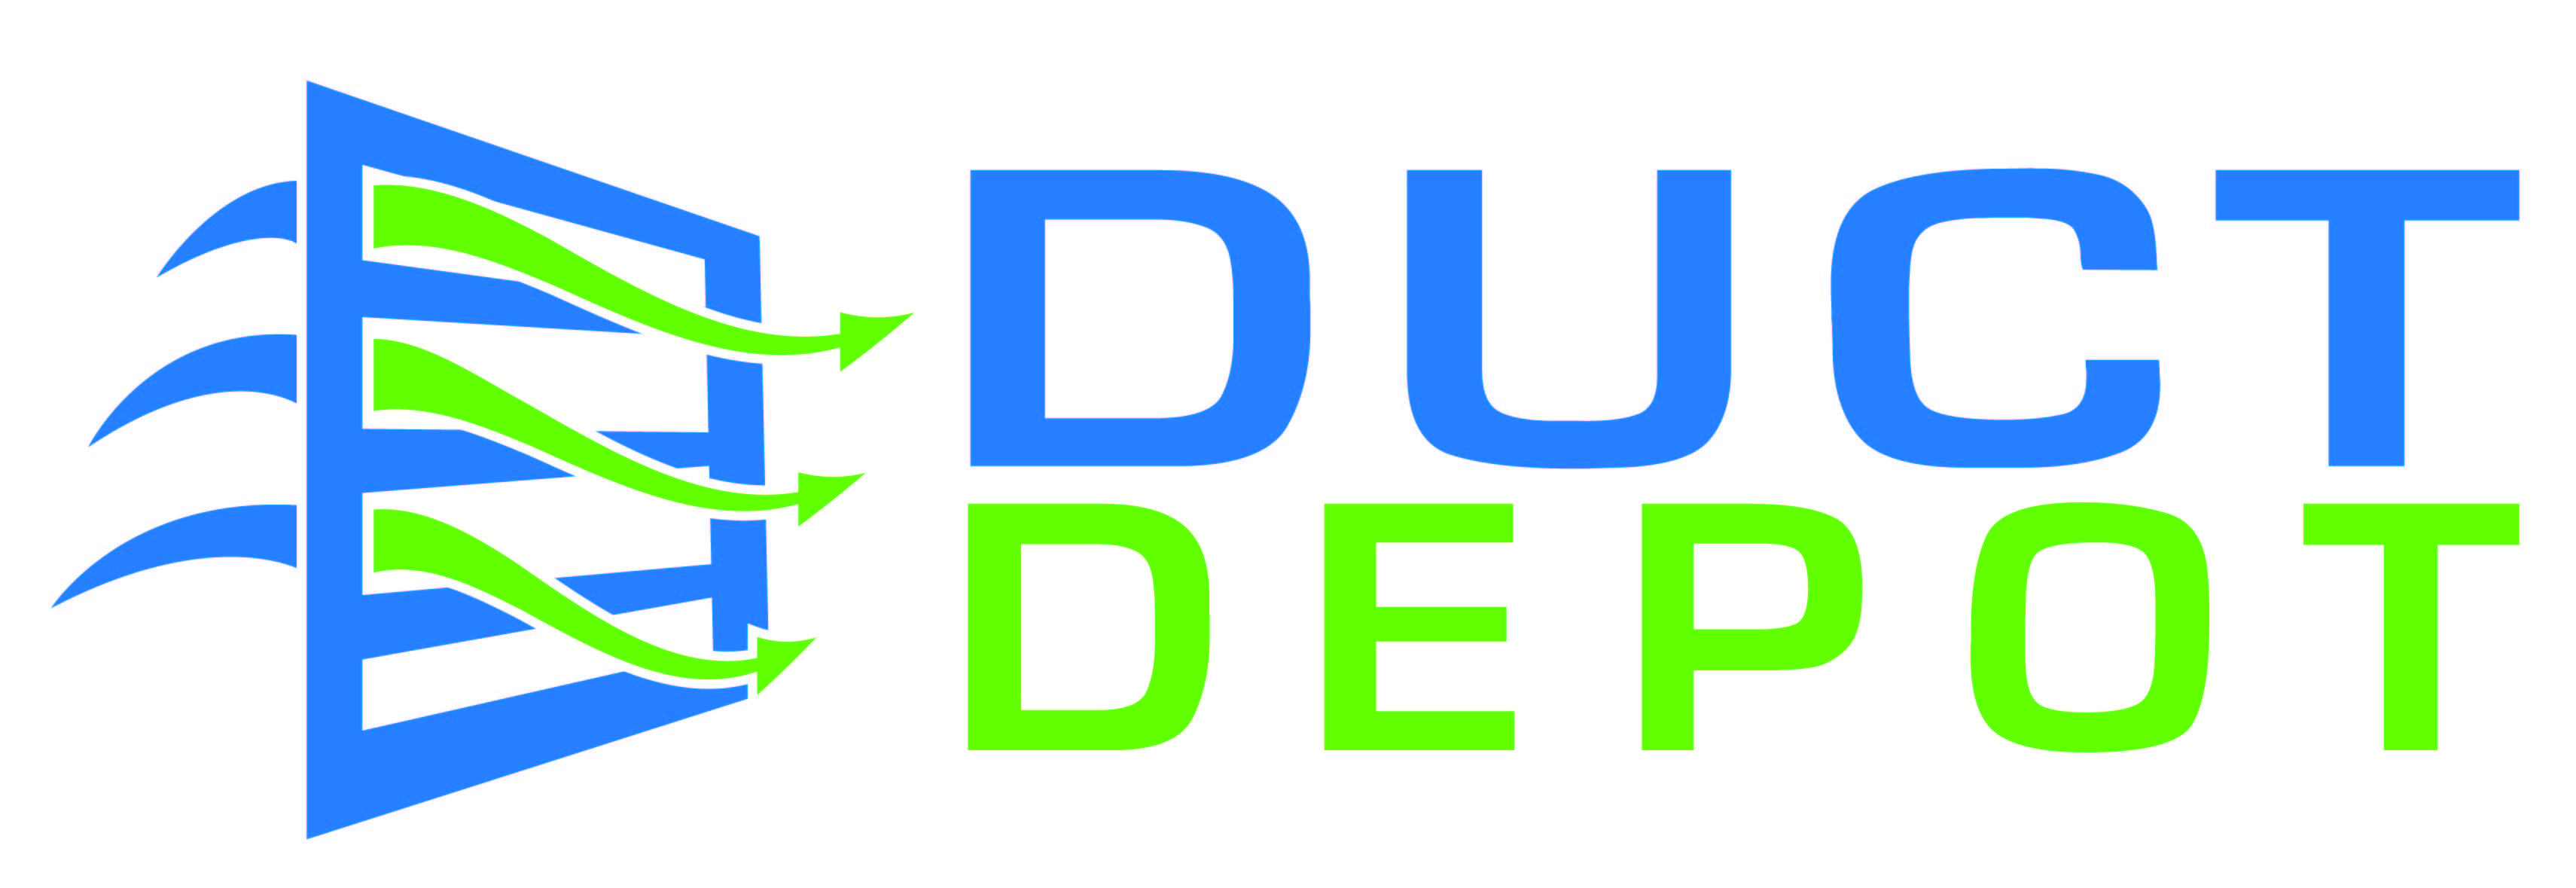 Duct Depot Logo